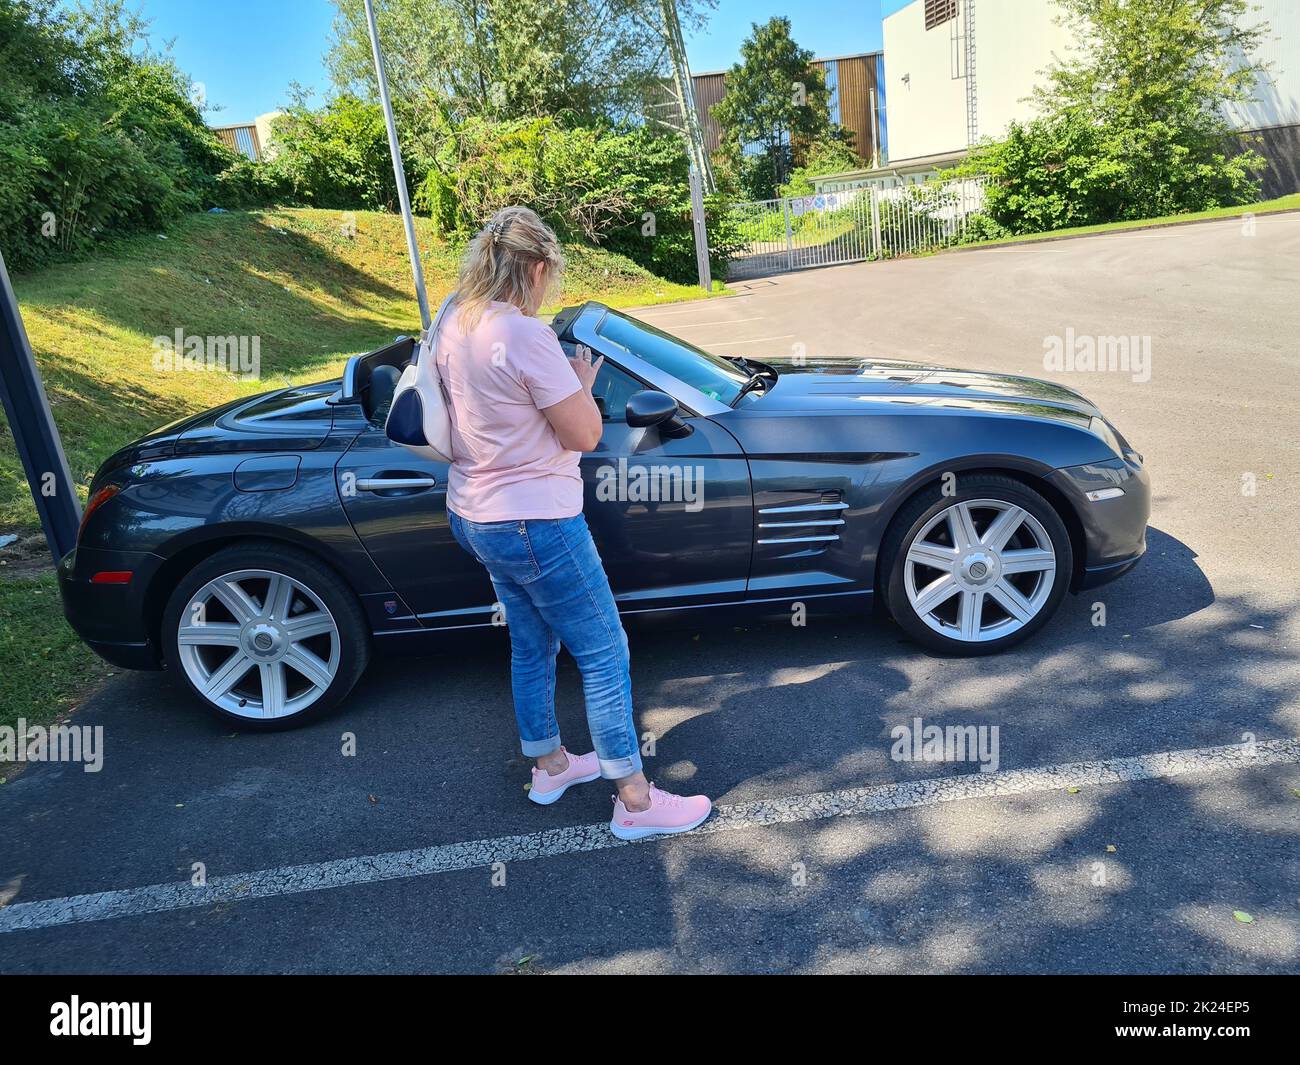 Essen, Nrw, Germany - June 26, 2020: Chrysler Crossfire luxury sports car Stock Photo